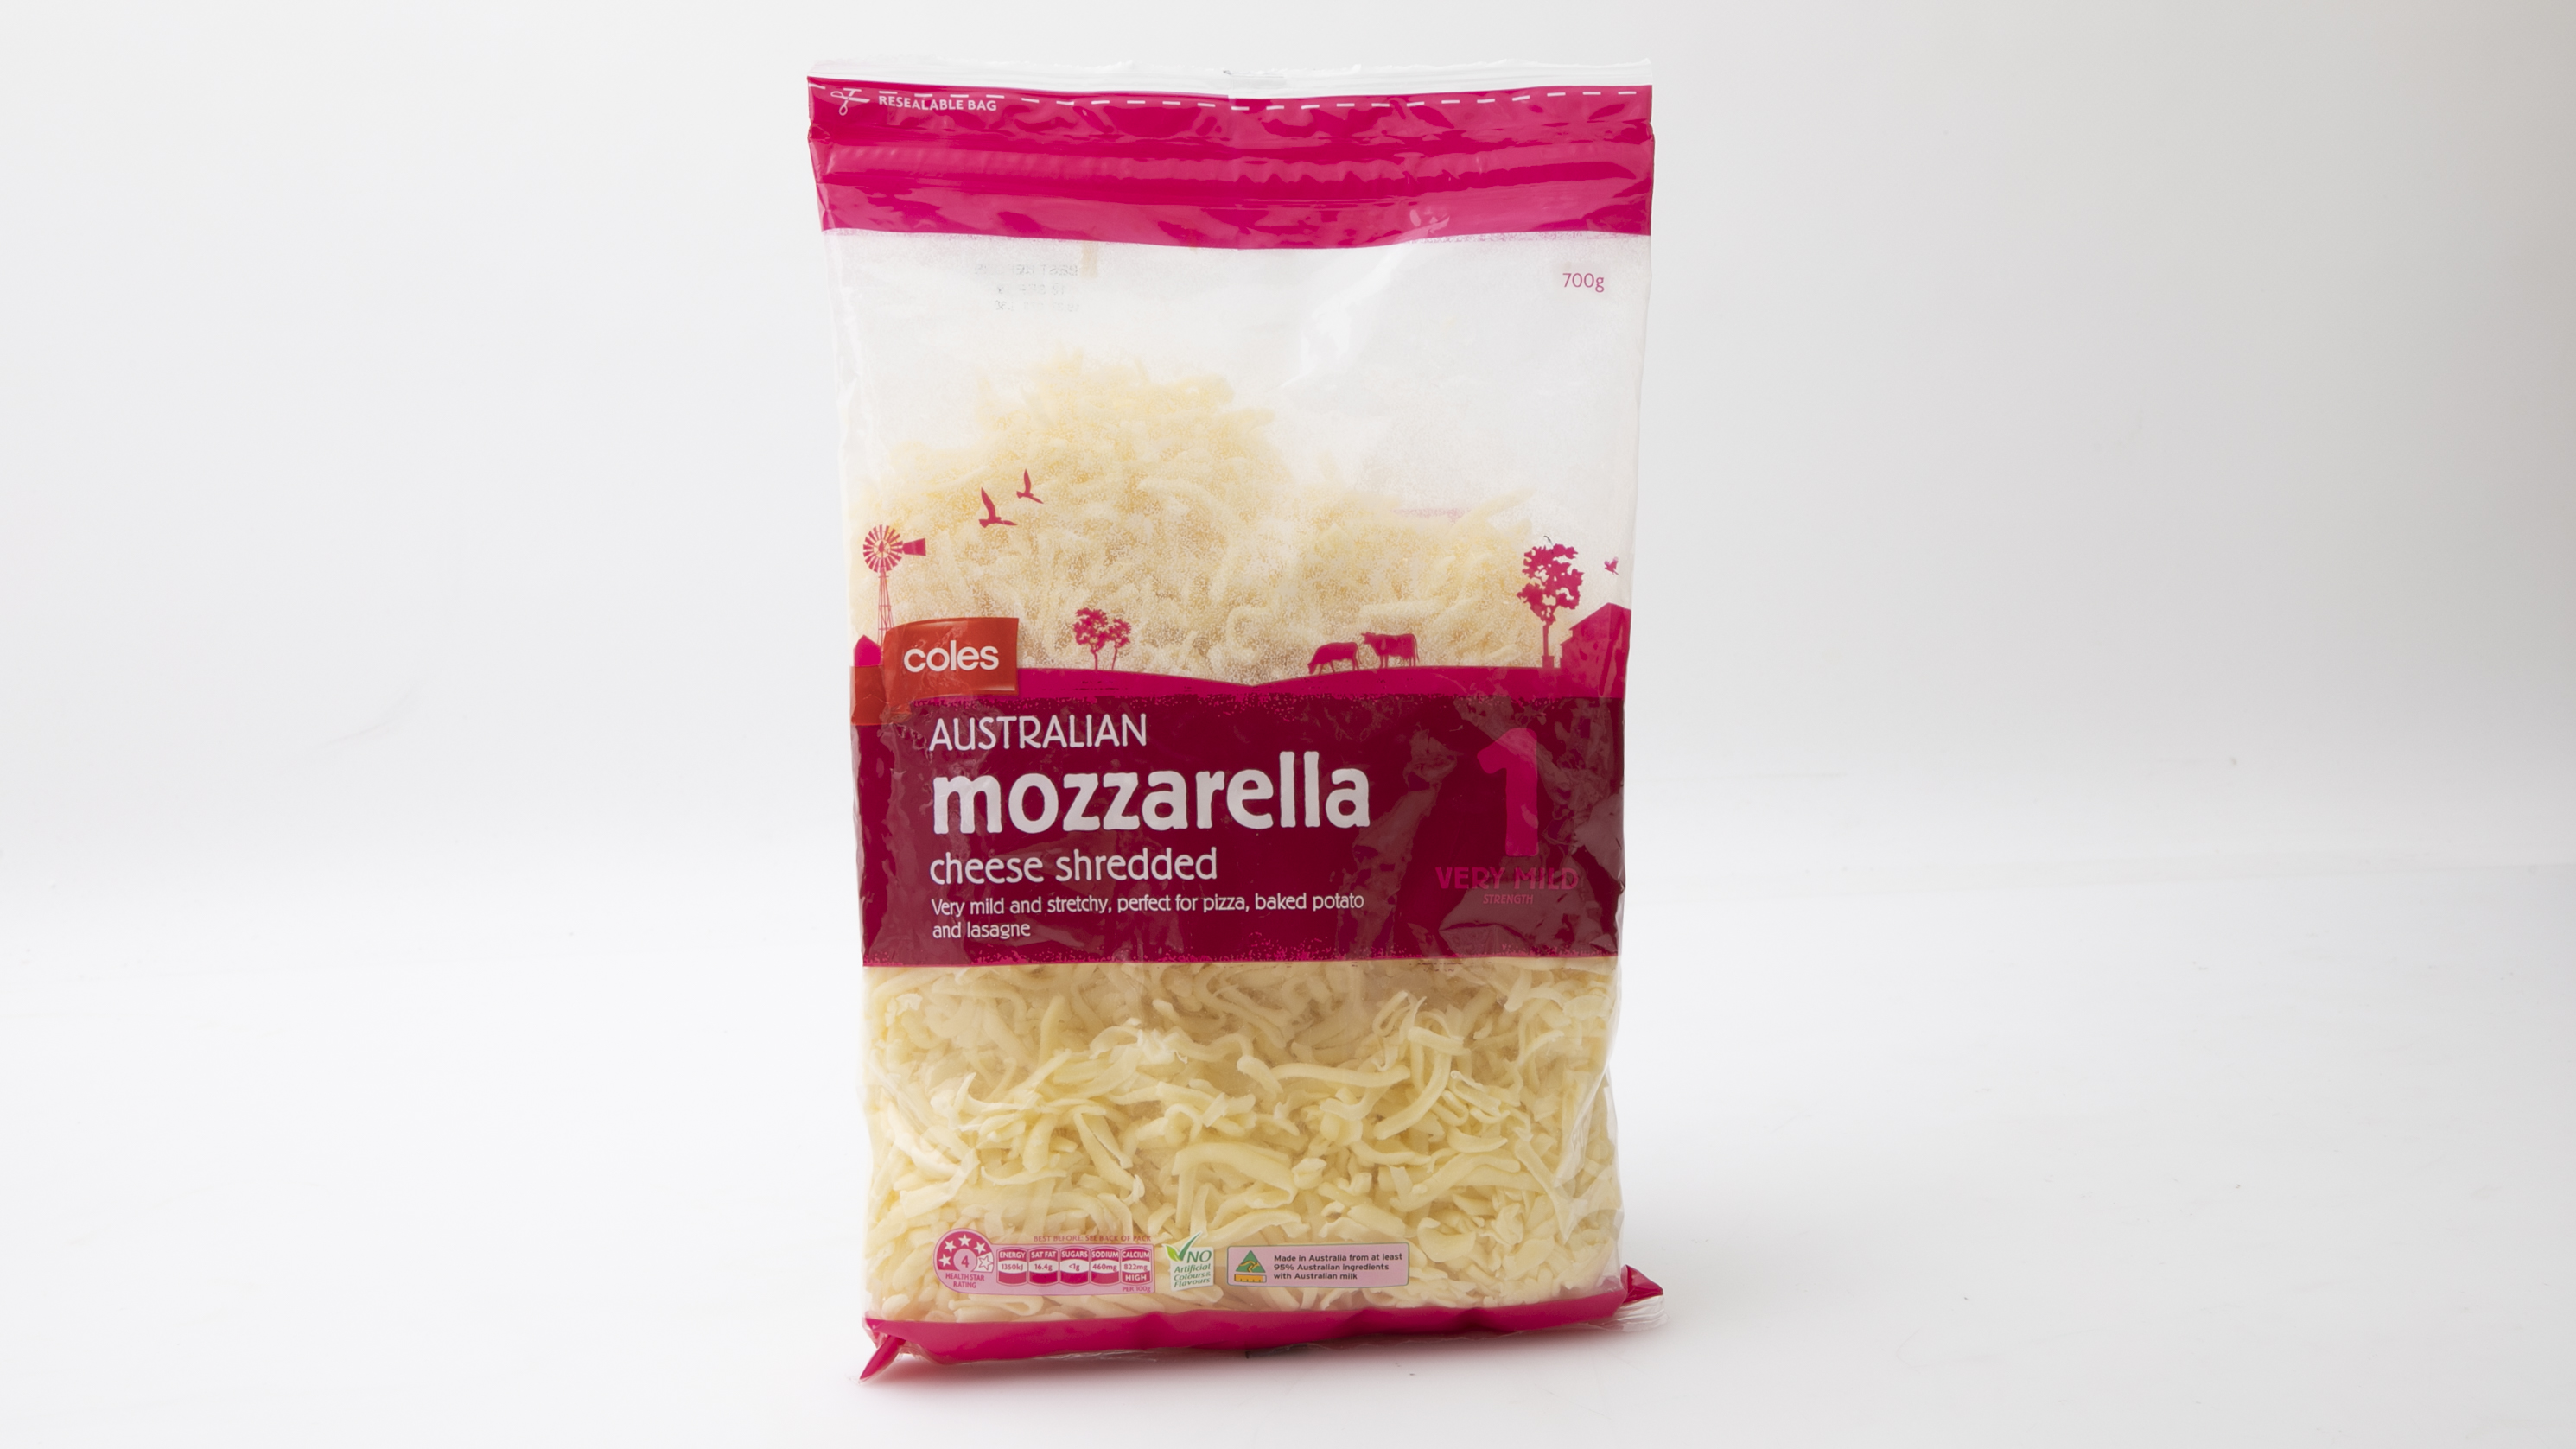 Coles Australian Mozzarella Cheese Shredded carousel image